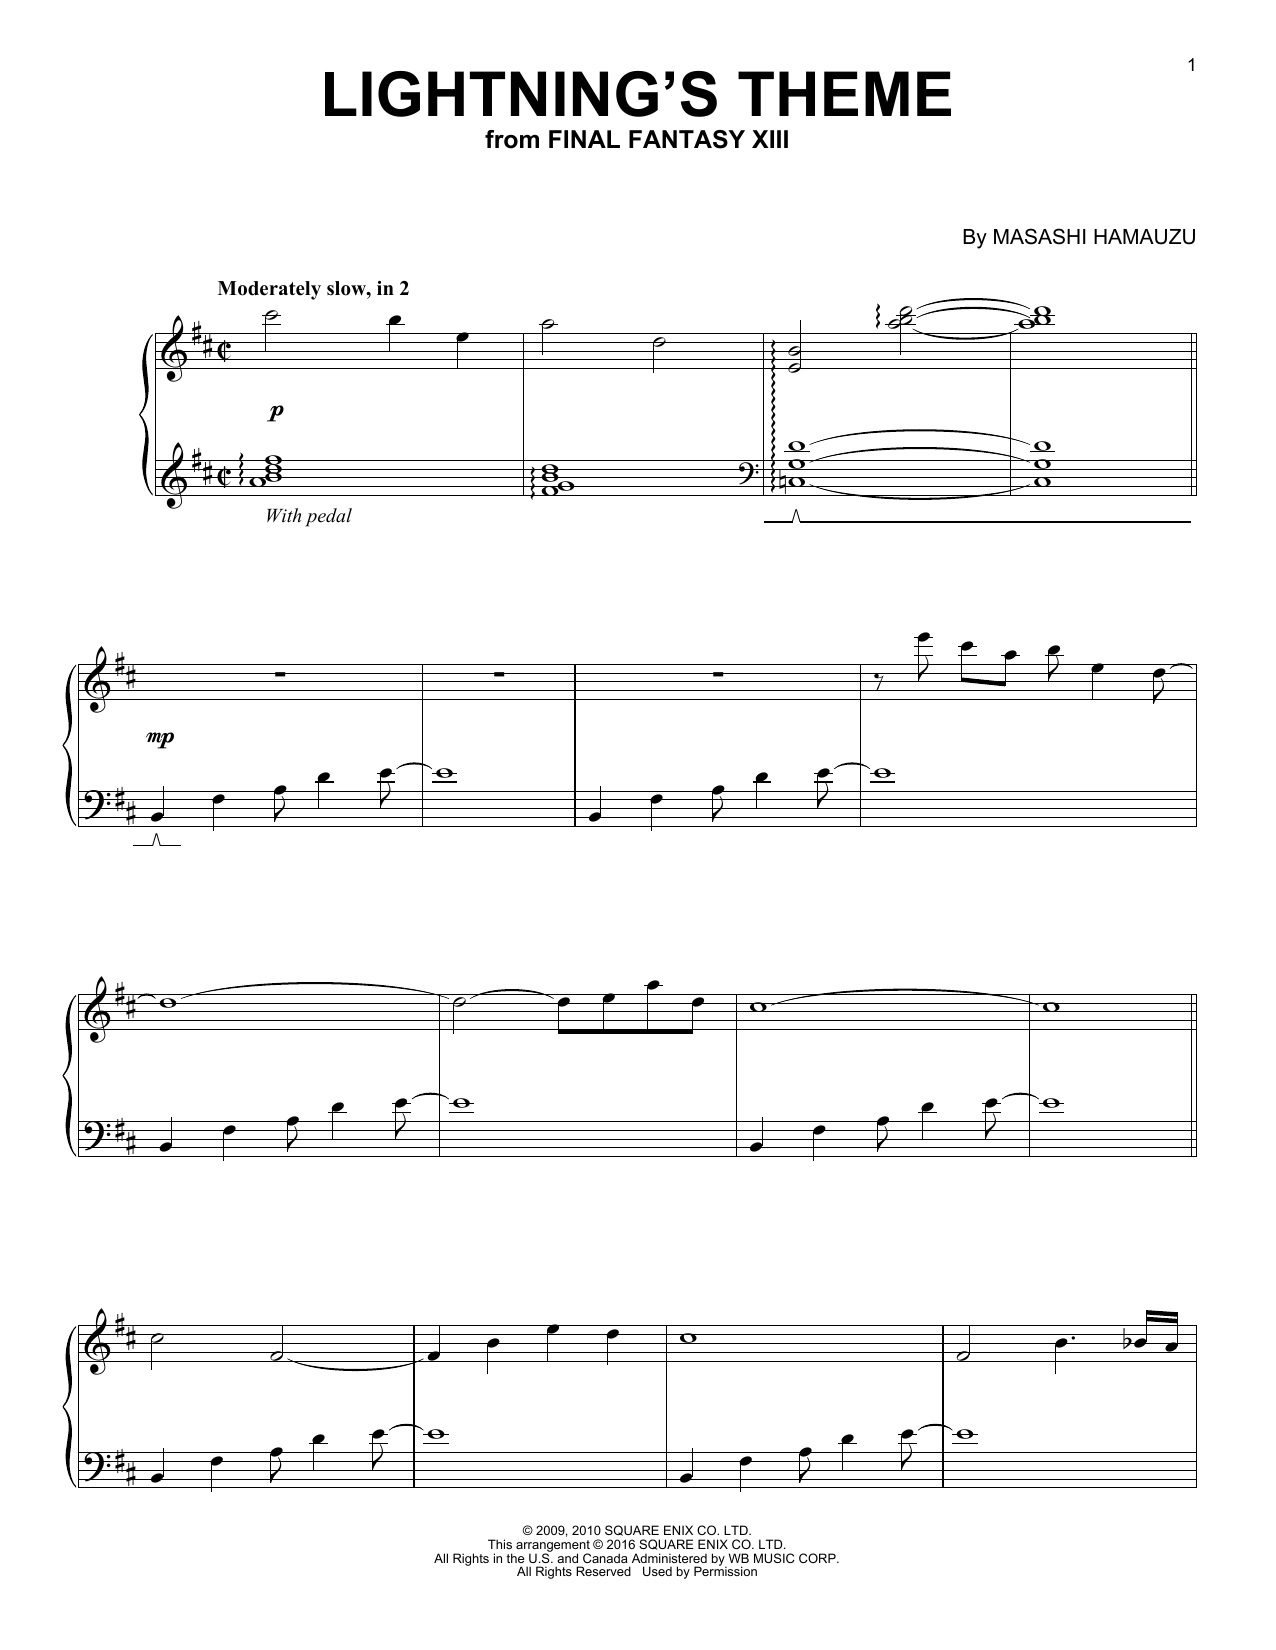 Masashi Hamauzu Lightning's Theme (from Final Fantasy XIII) Sheet Music Notes & Chords for Piano - Download or Print PDF